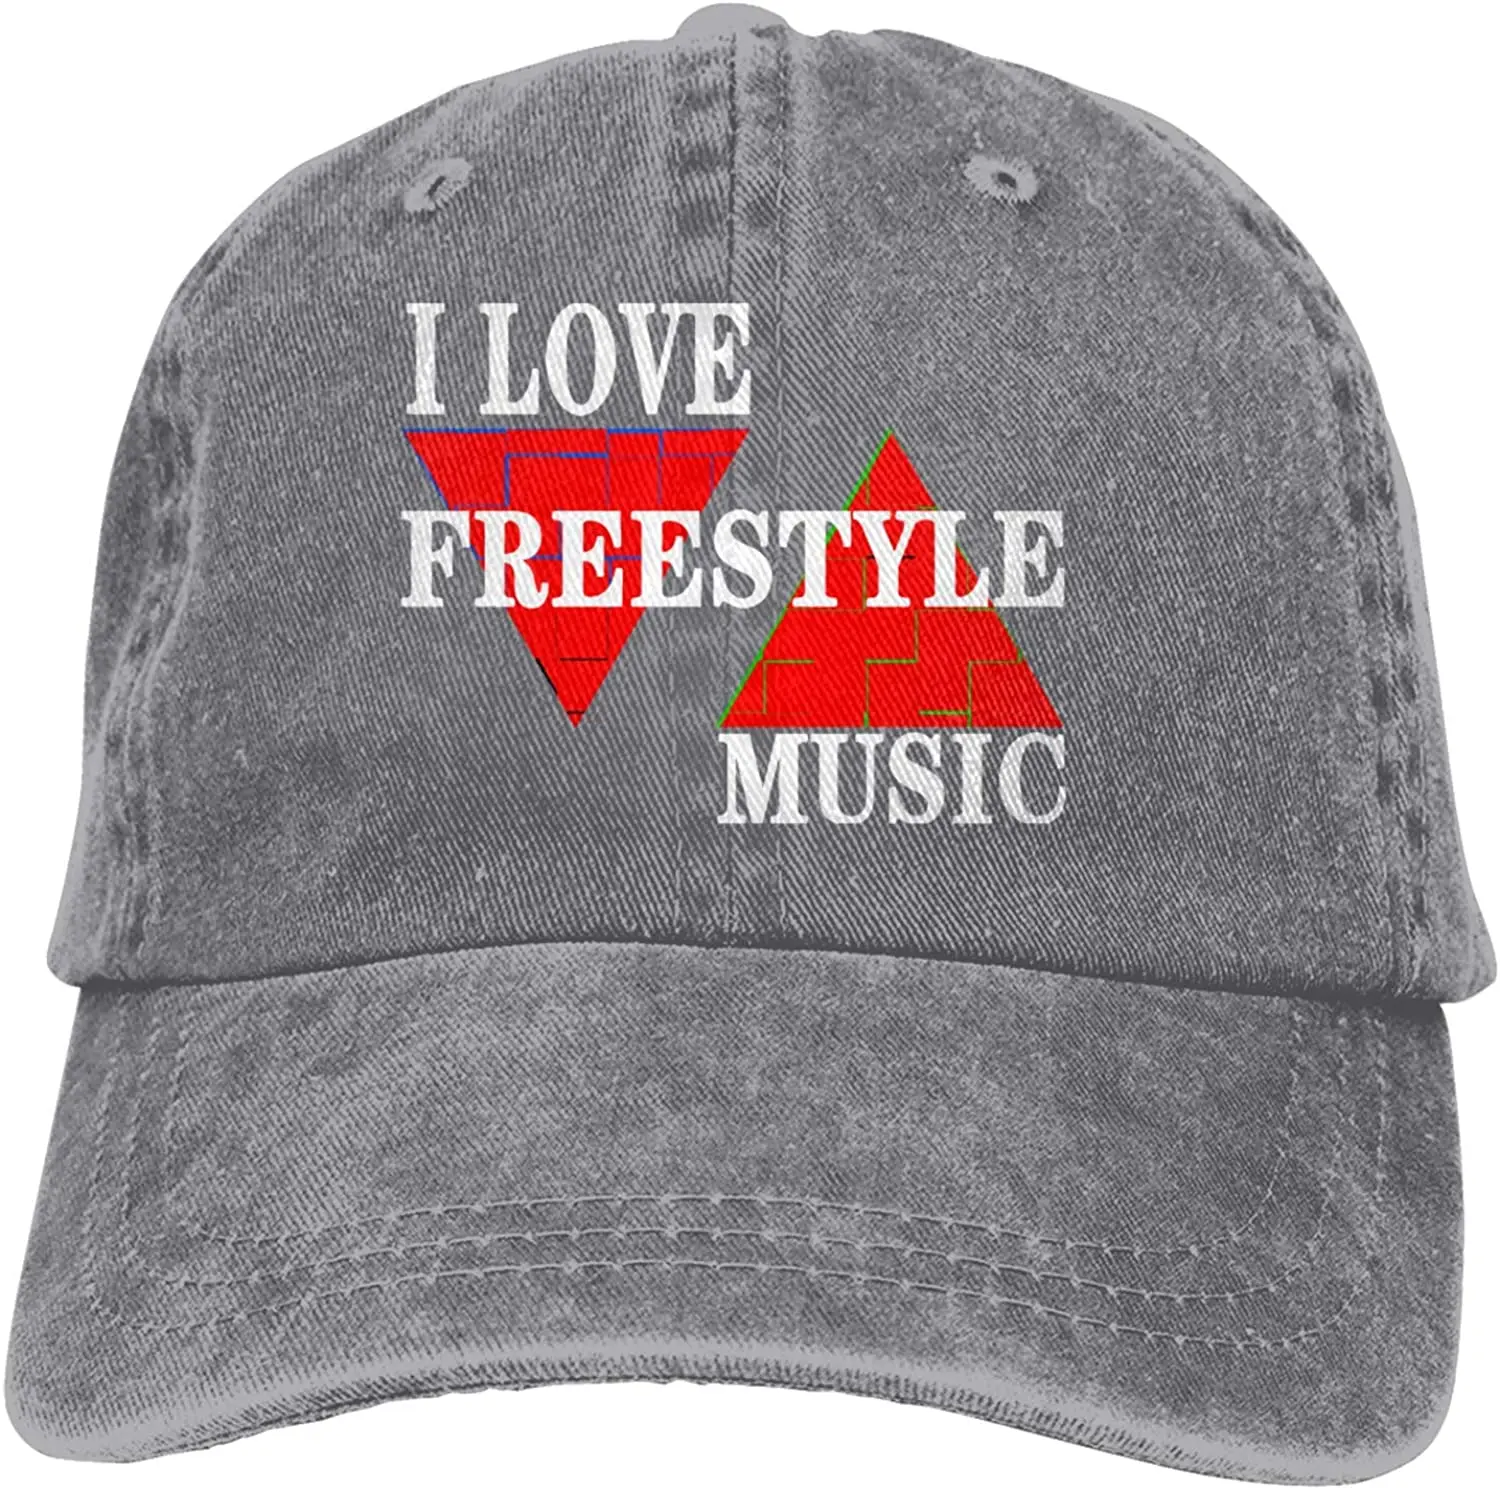 

I Love Freestyle Music Sports Denim Cap Adjustable Unisex Plain Baseball Cowboy Snapback Hat